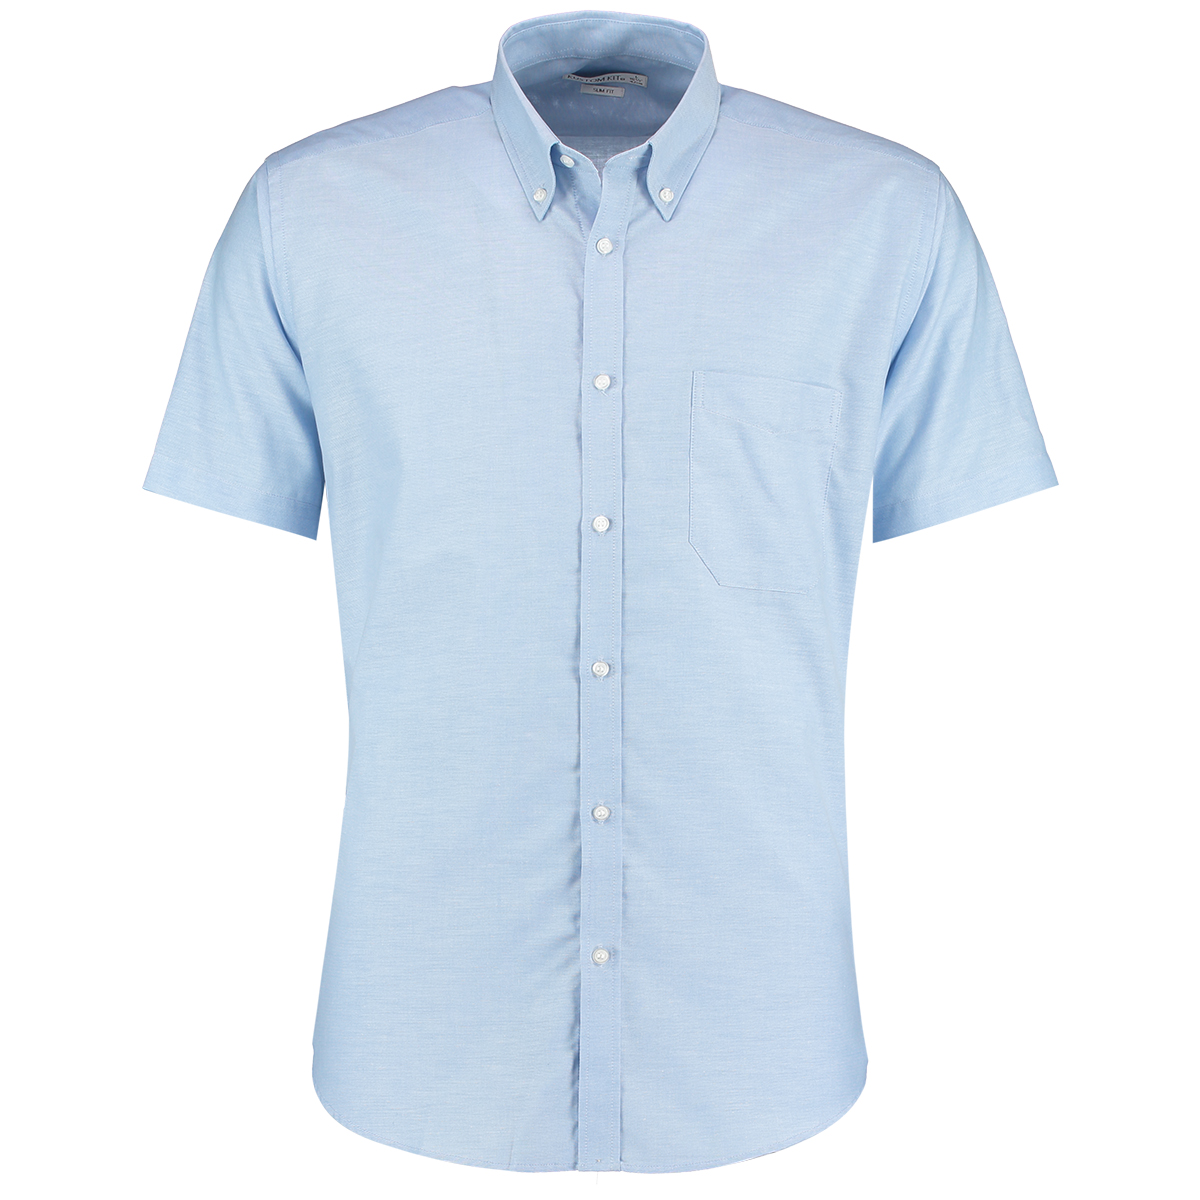 KK183 Slim Fit Workwear Oxford Shirt - Kustom Kit